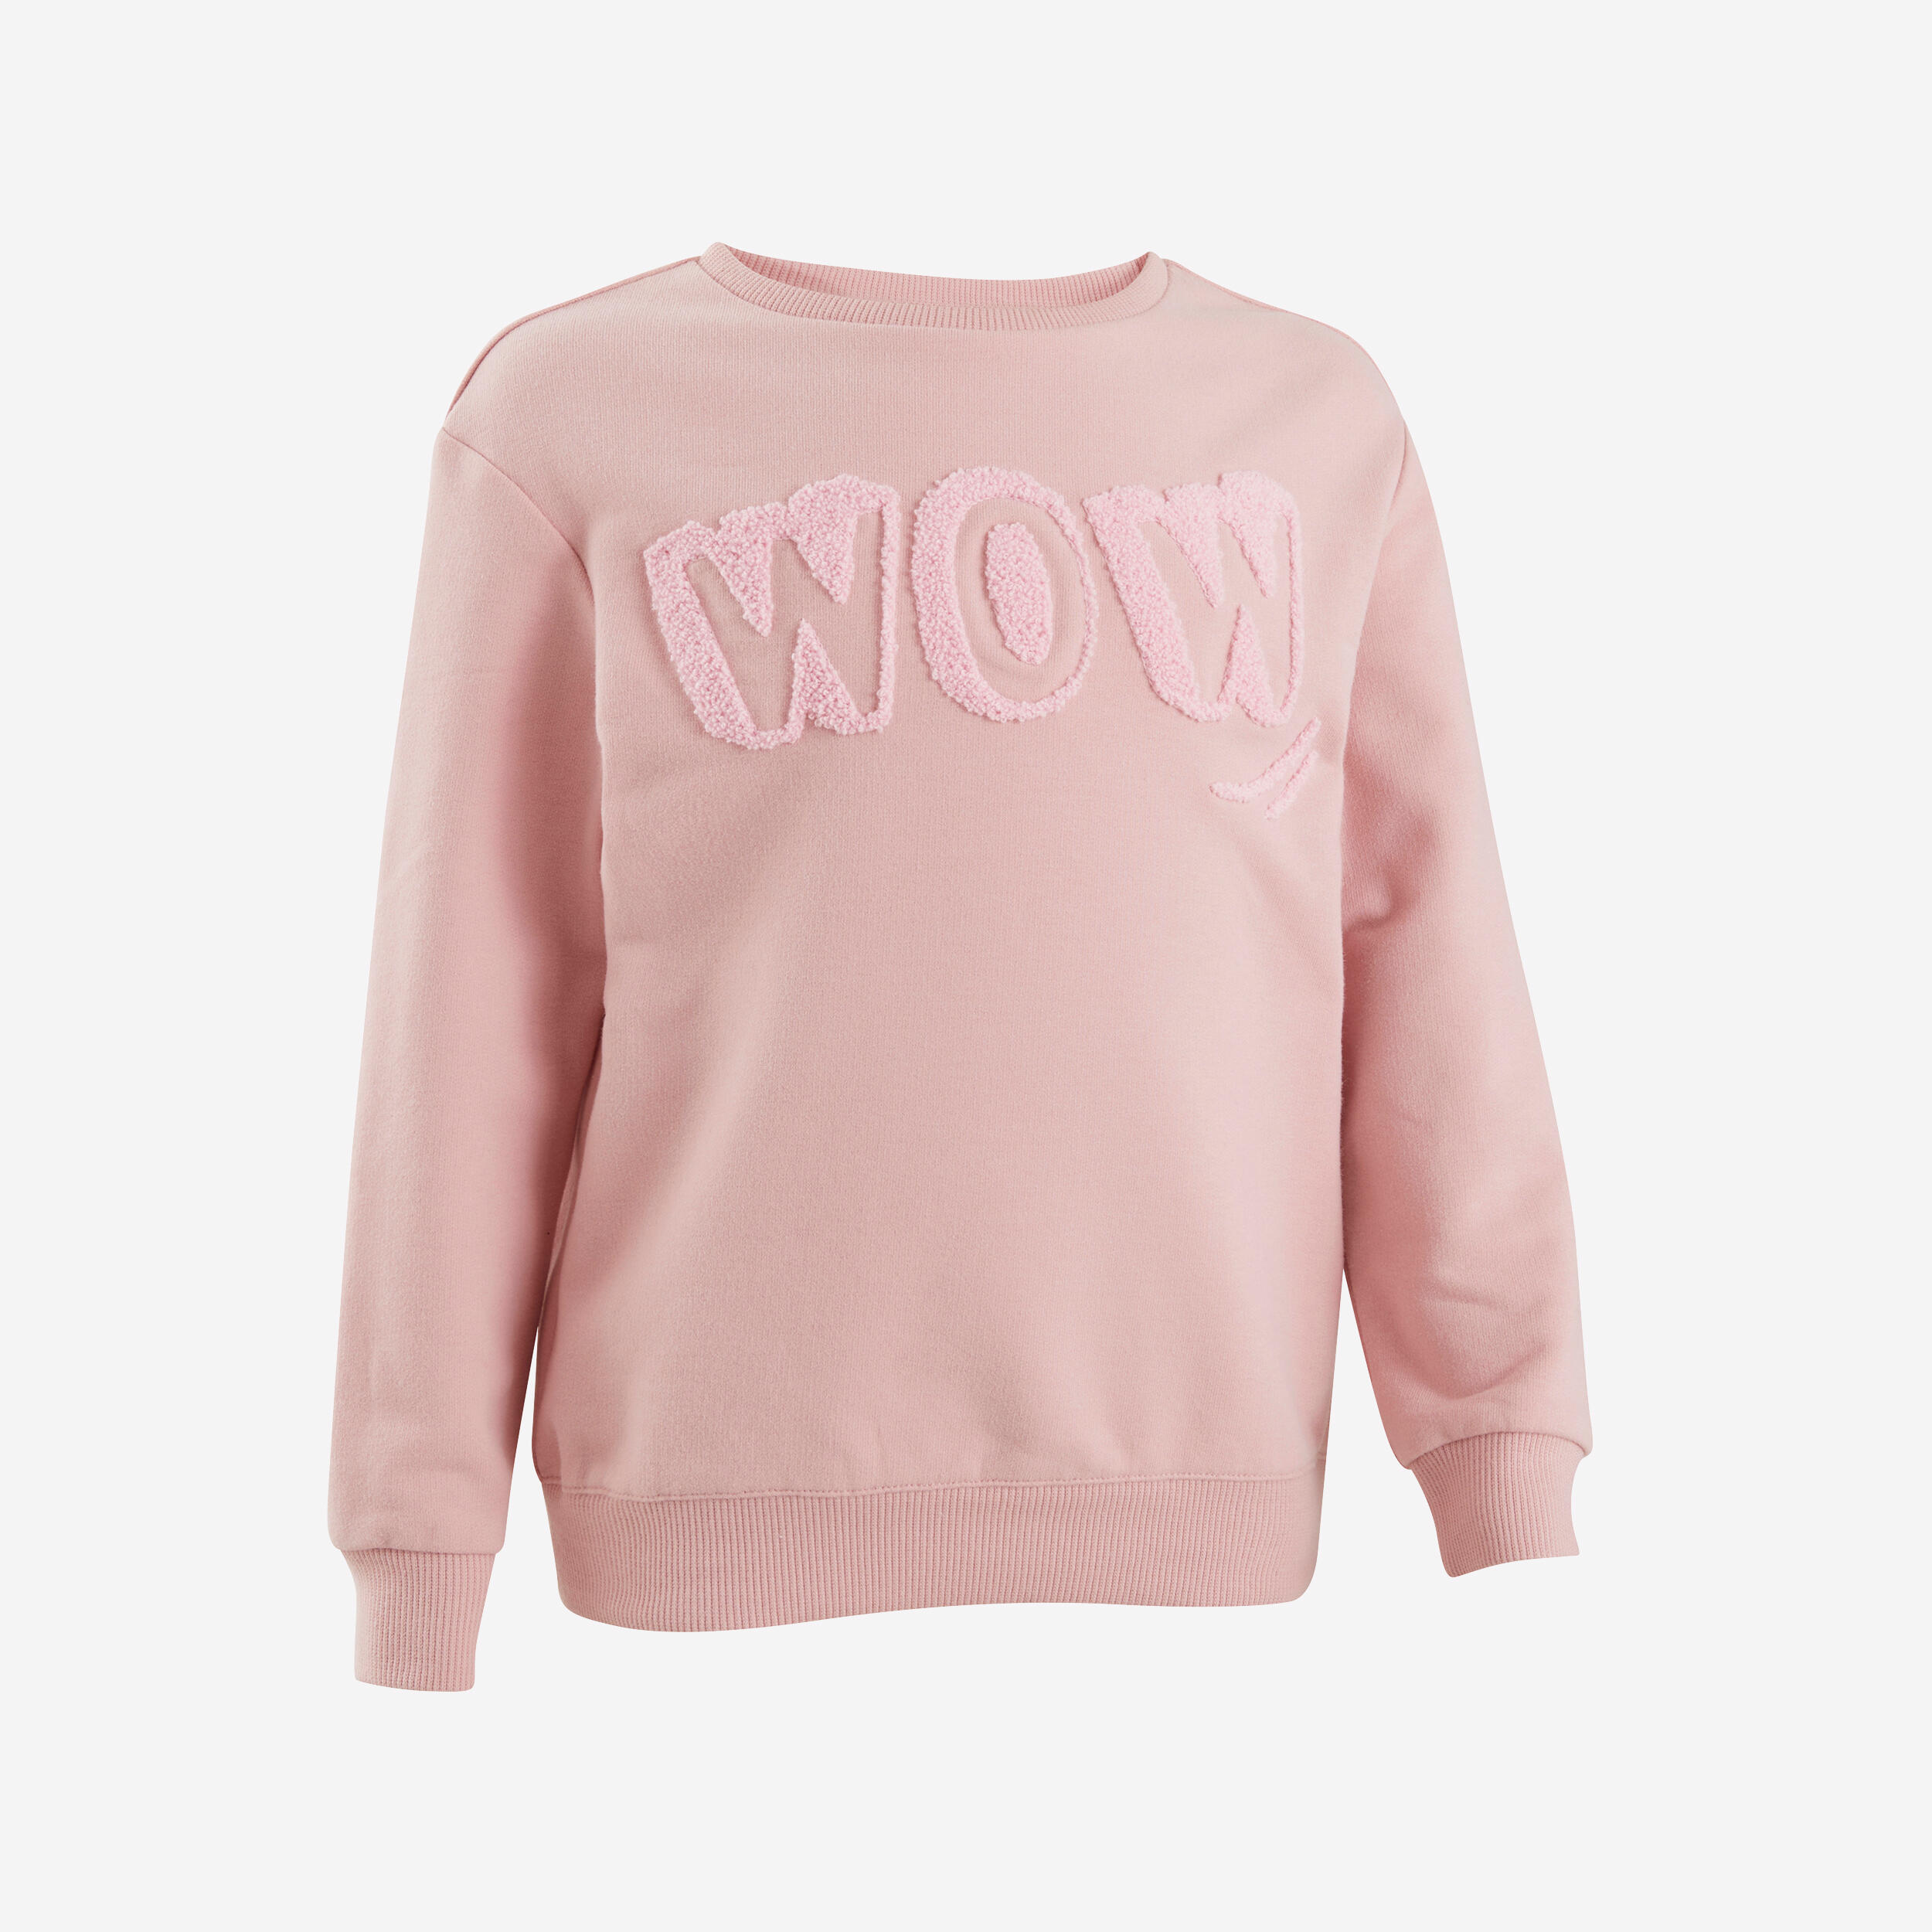 DOMYOS Kids' Sweatshirt Basic - Pink with Motifs